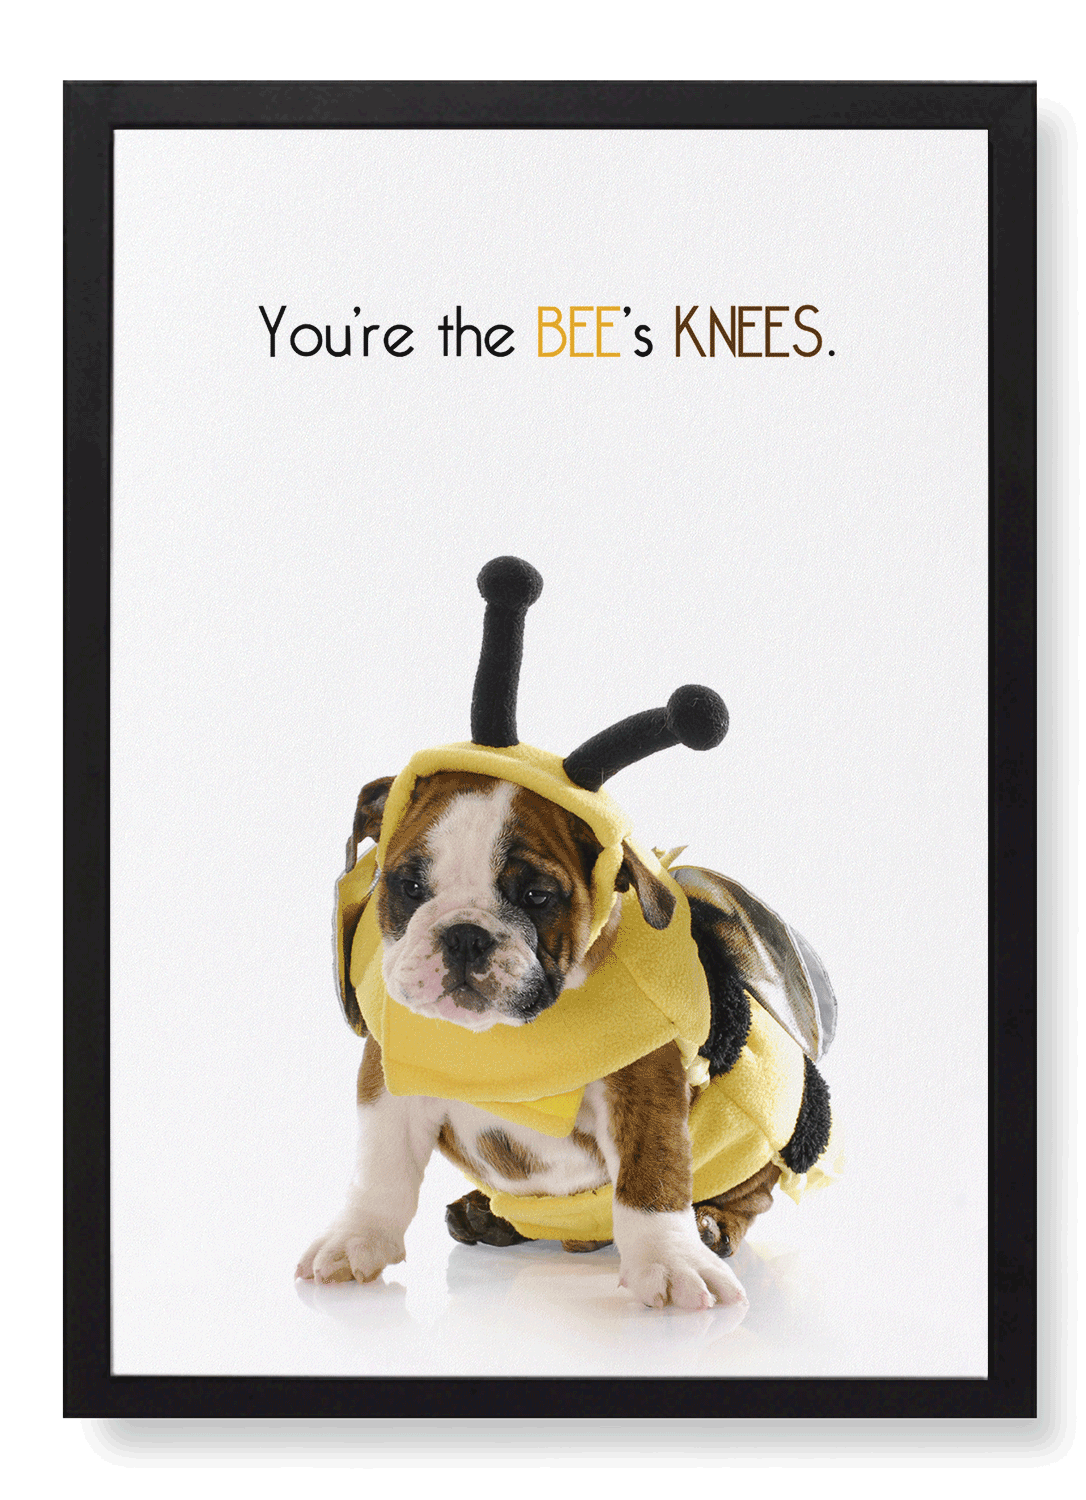 THE BEE'S KNEES